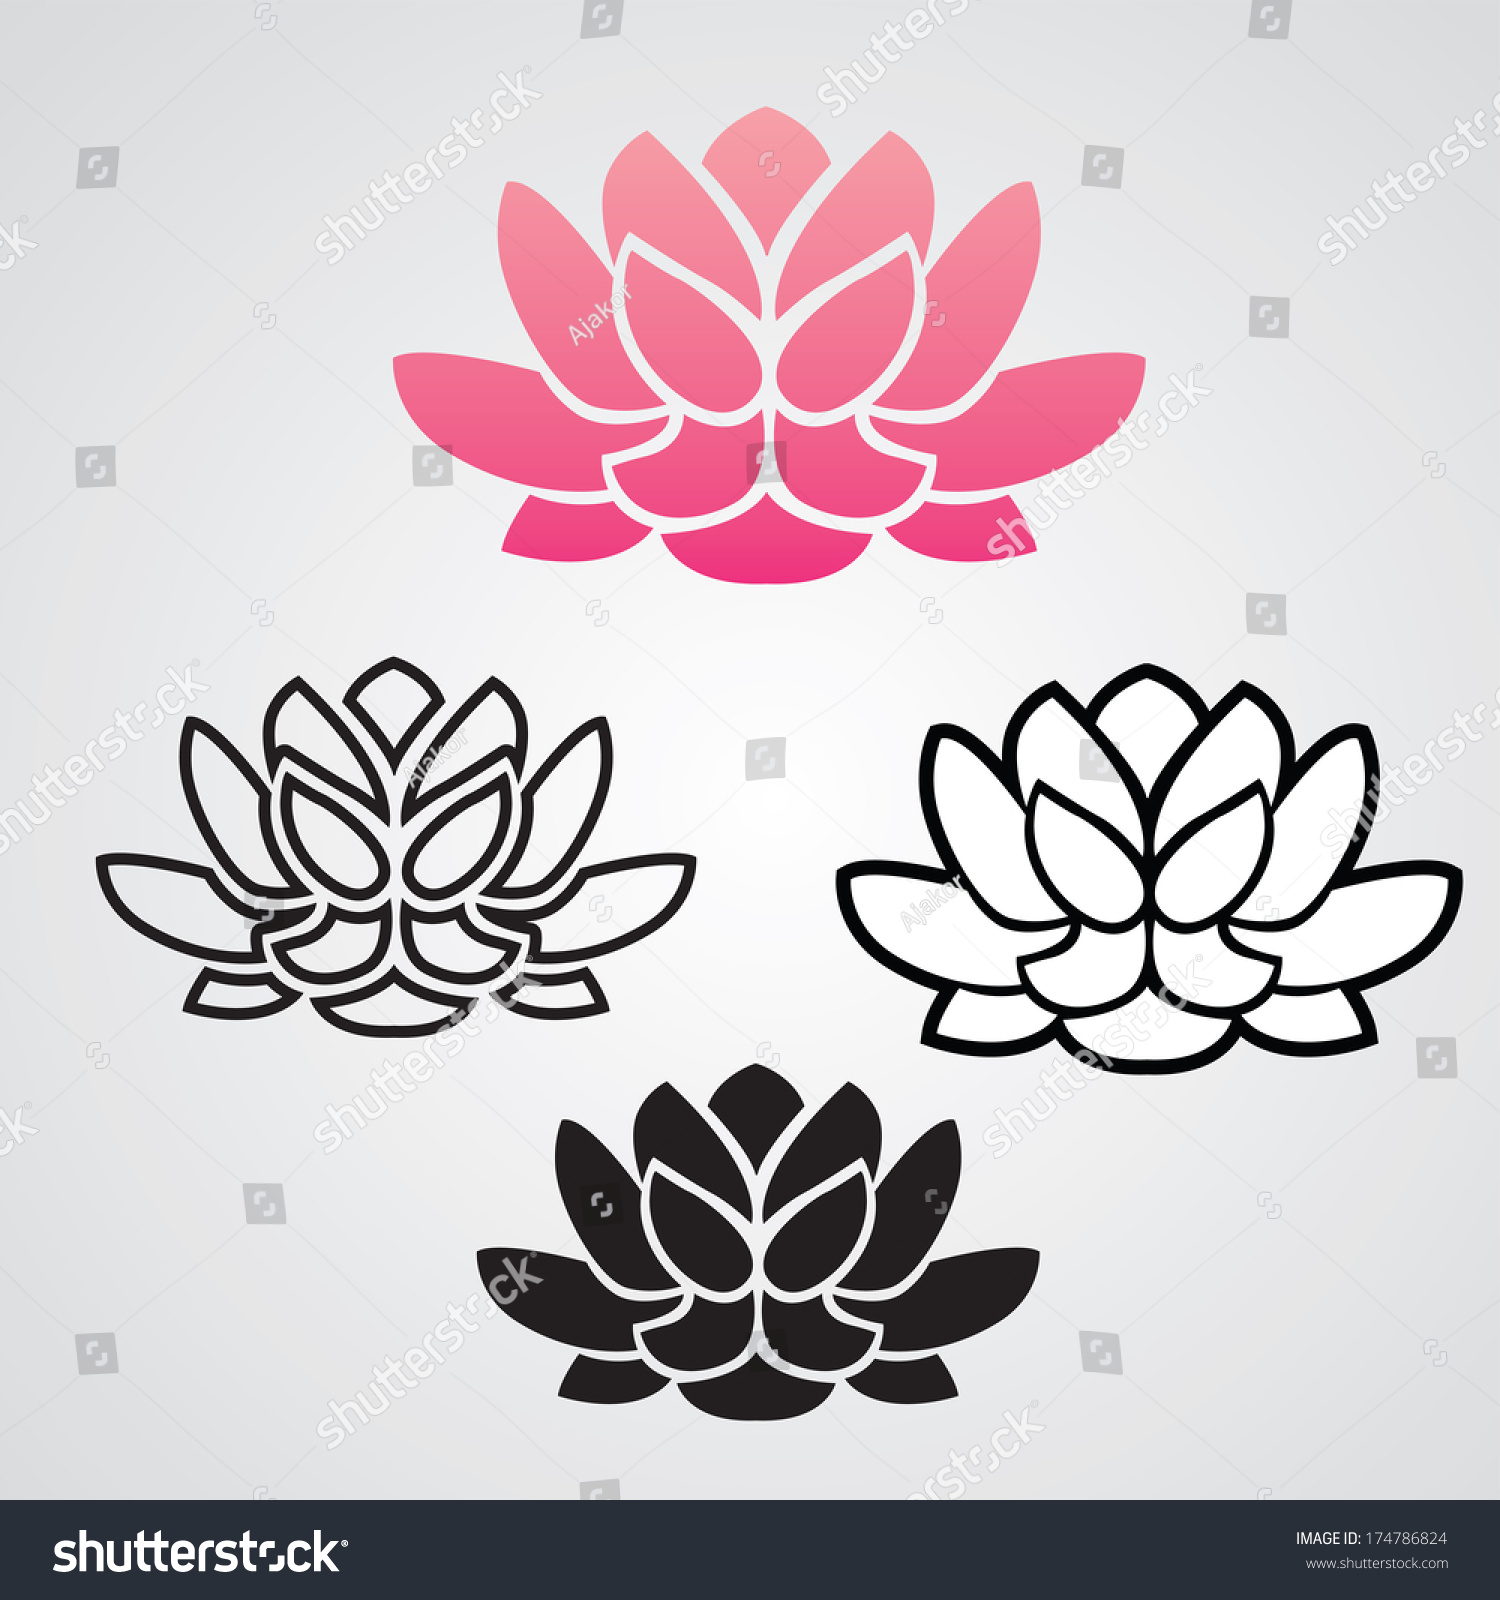 Symbol Yoga Lotus Flower Graphic Vector Stock Vector Royalty Free 174786824